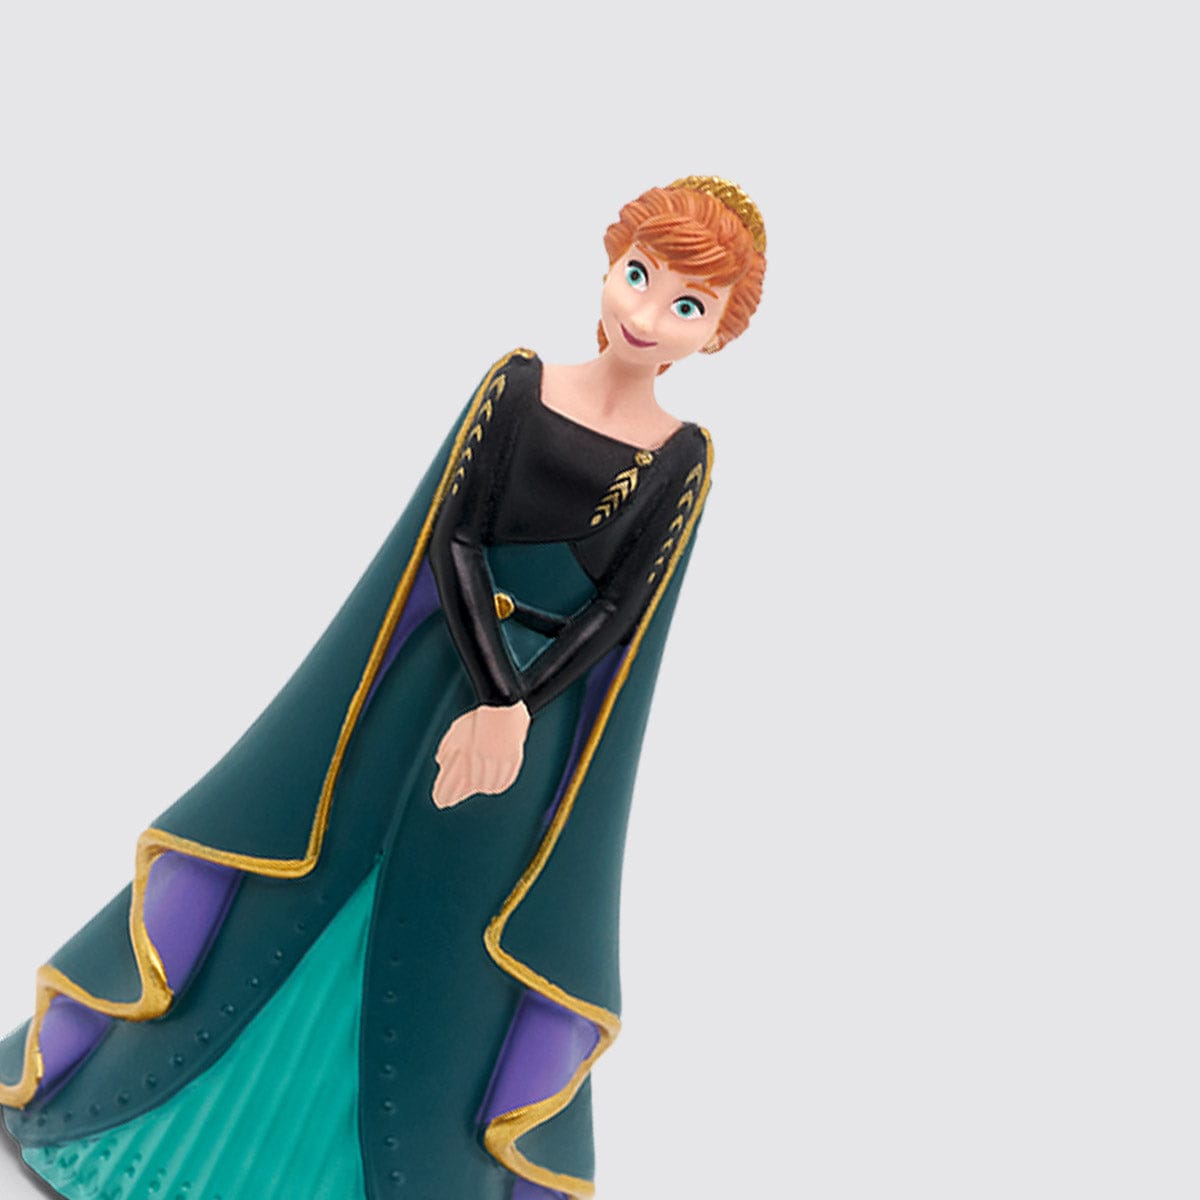 tonies® I Disney Frozen 2: Anna Tonie I Buy now